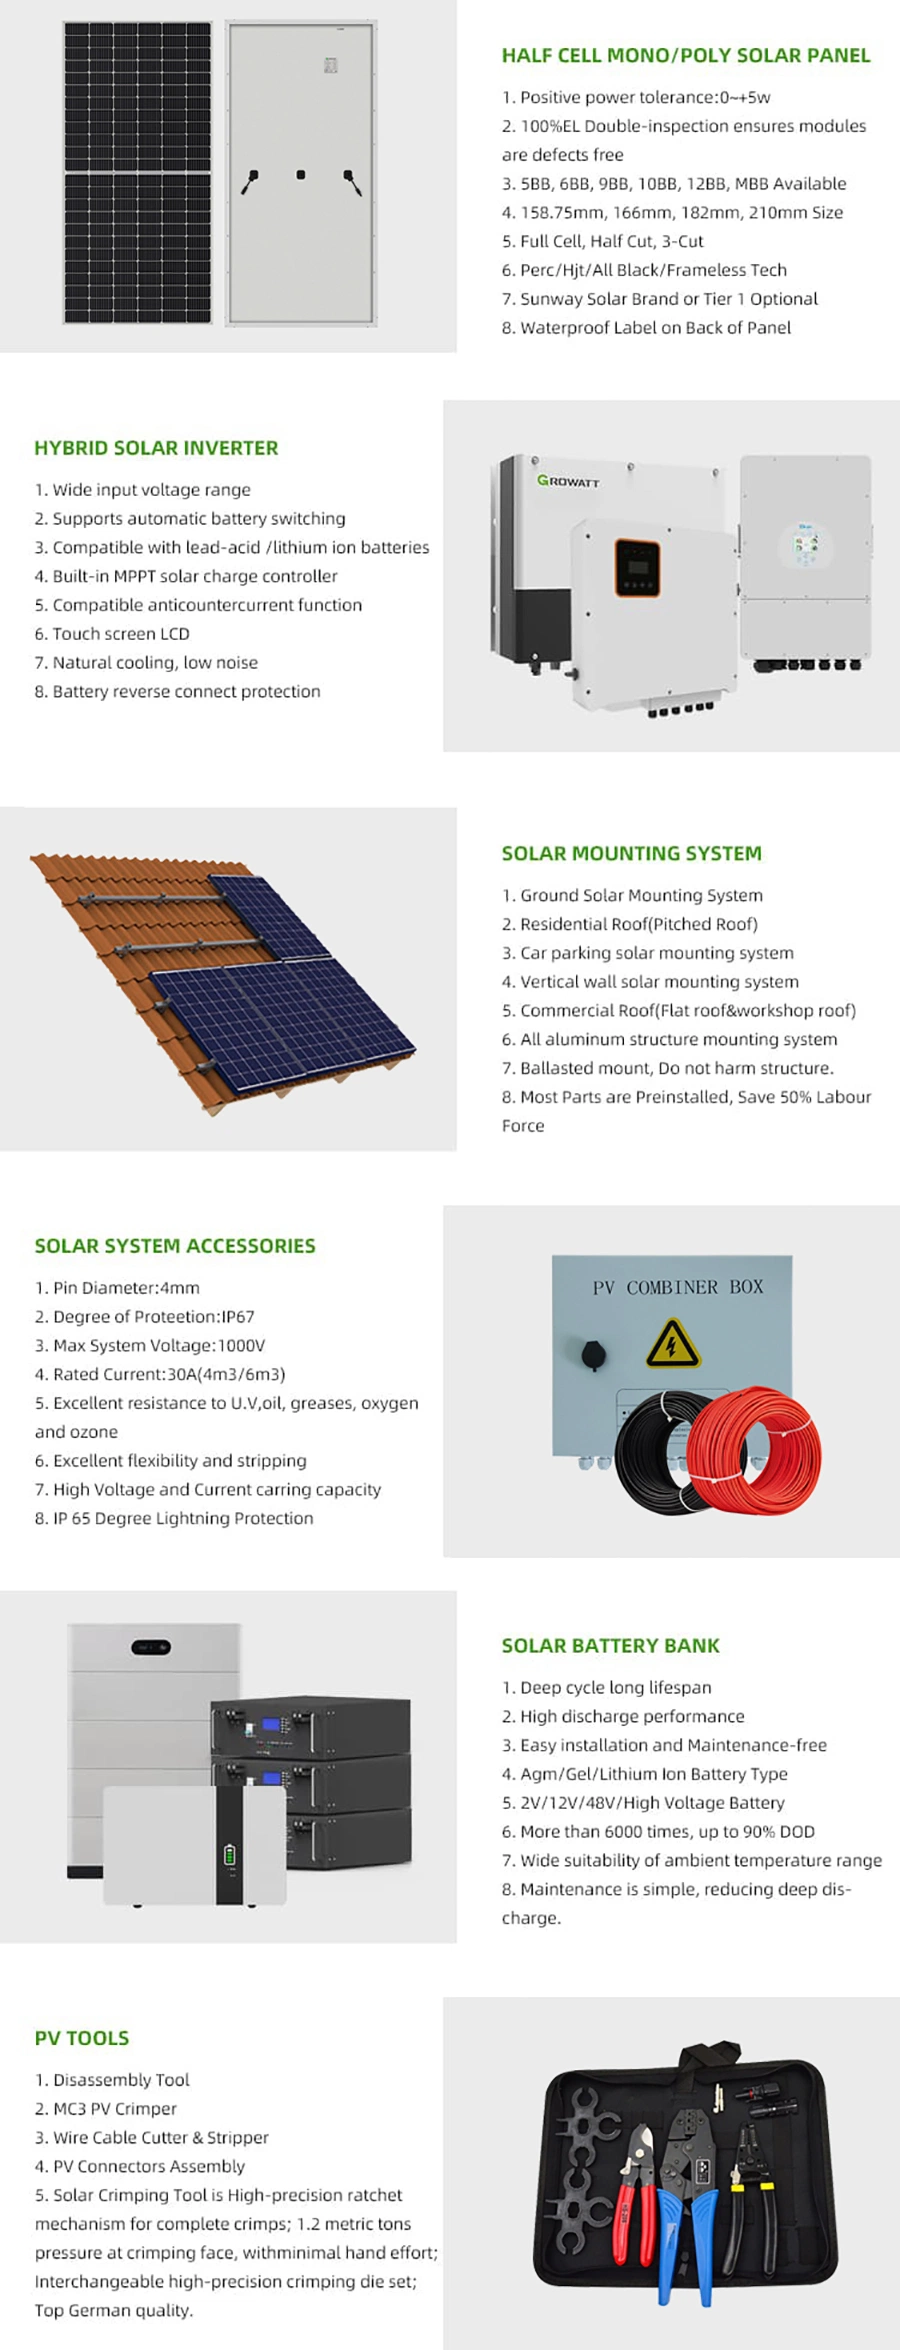 Home Full Set Hybrid Solar System 3kw 4kw 5kw 8kw 10kw 12kw Photovoltaic Solar Energy System Kit for Africa Market